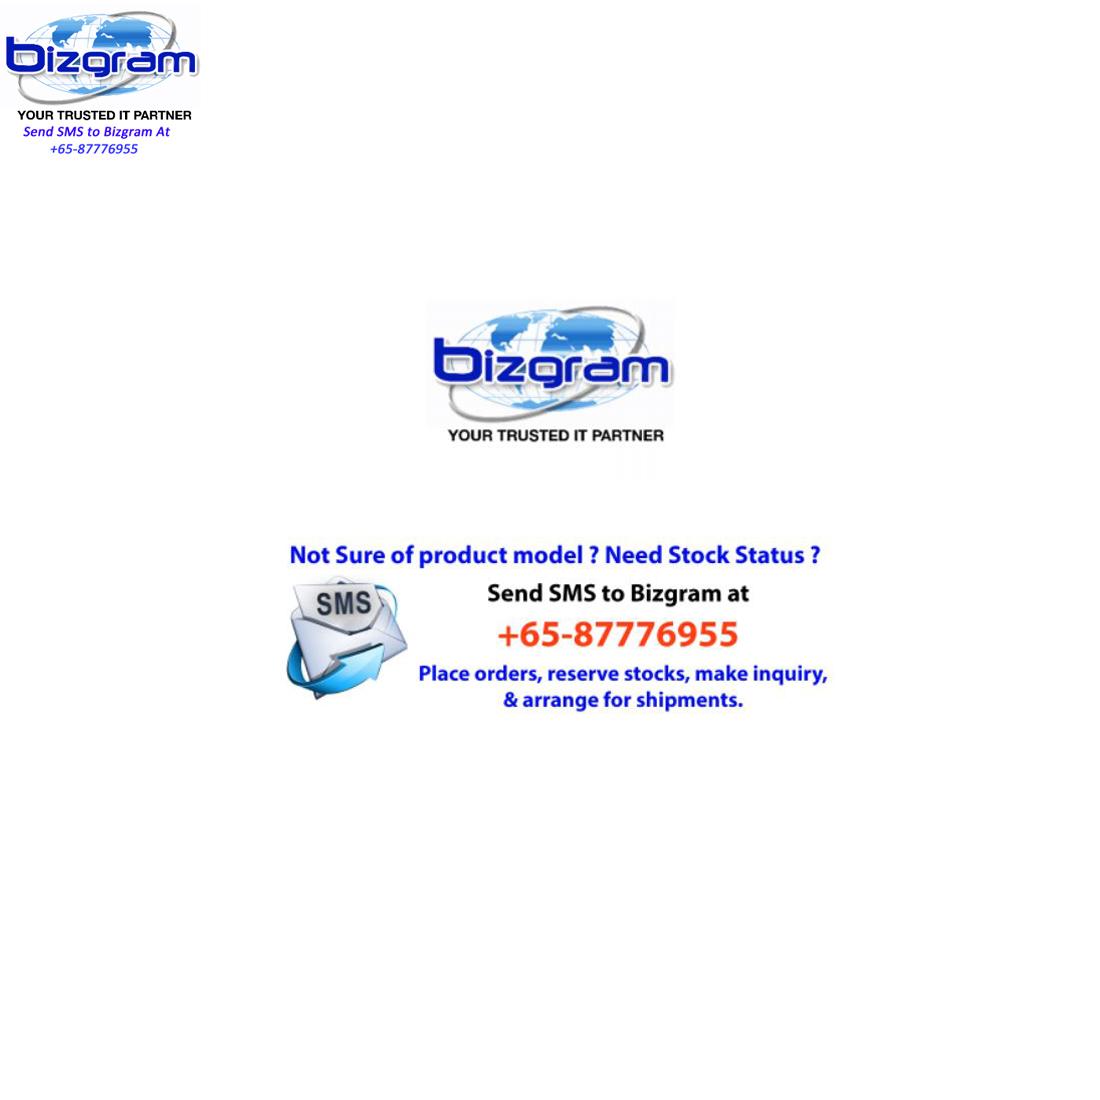 Bizgram Gigabyte MX31 Zeon Server, Intel i3-7100 Processor, MX31-CE0 Motherboard LGA1151, 8GB DDR4 RAM, Samsung 860 EVO 250GB SSD, Free...